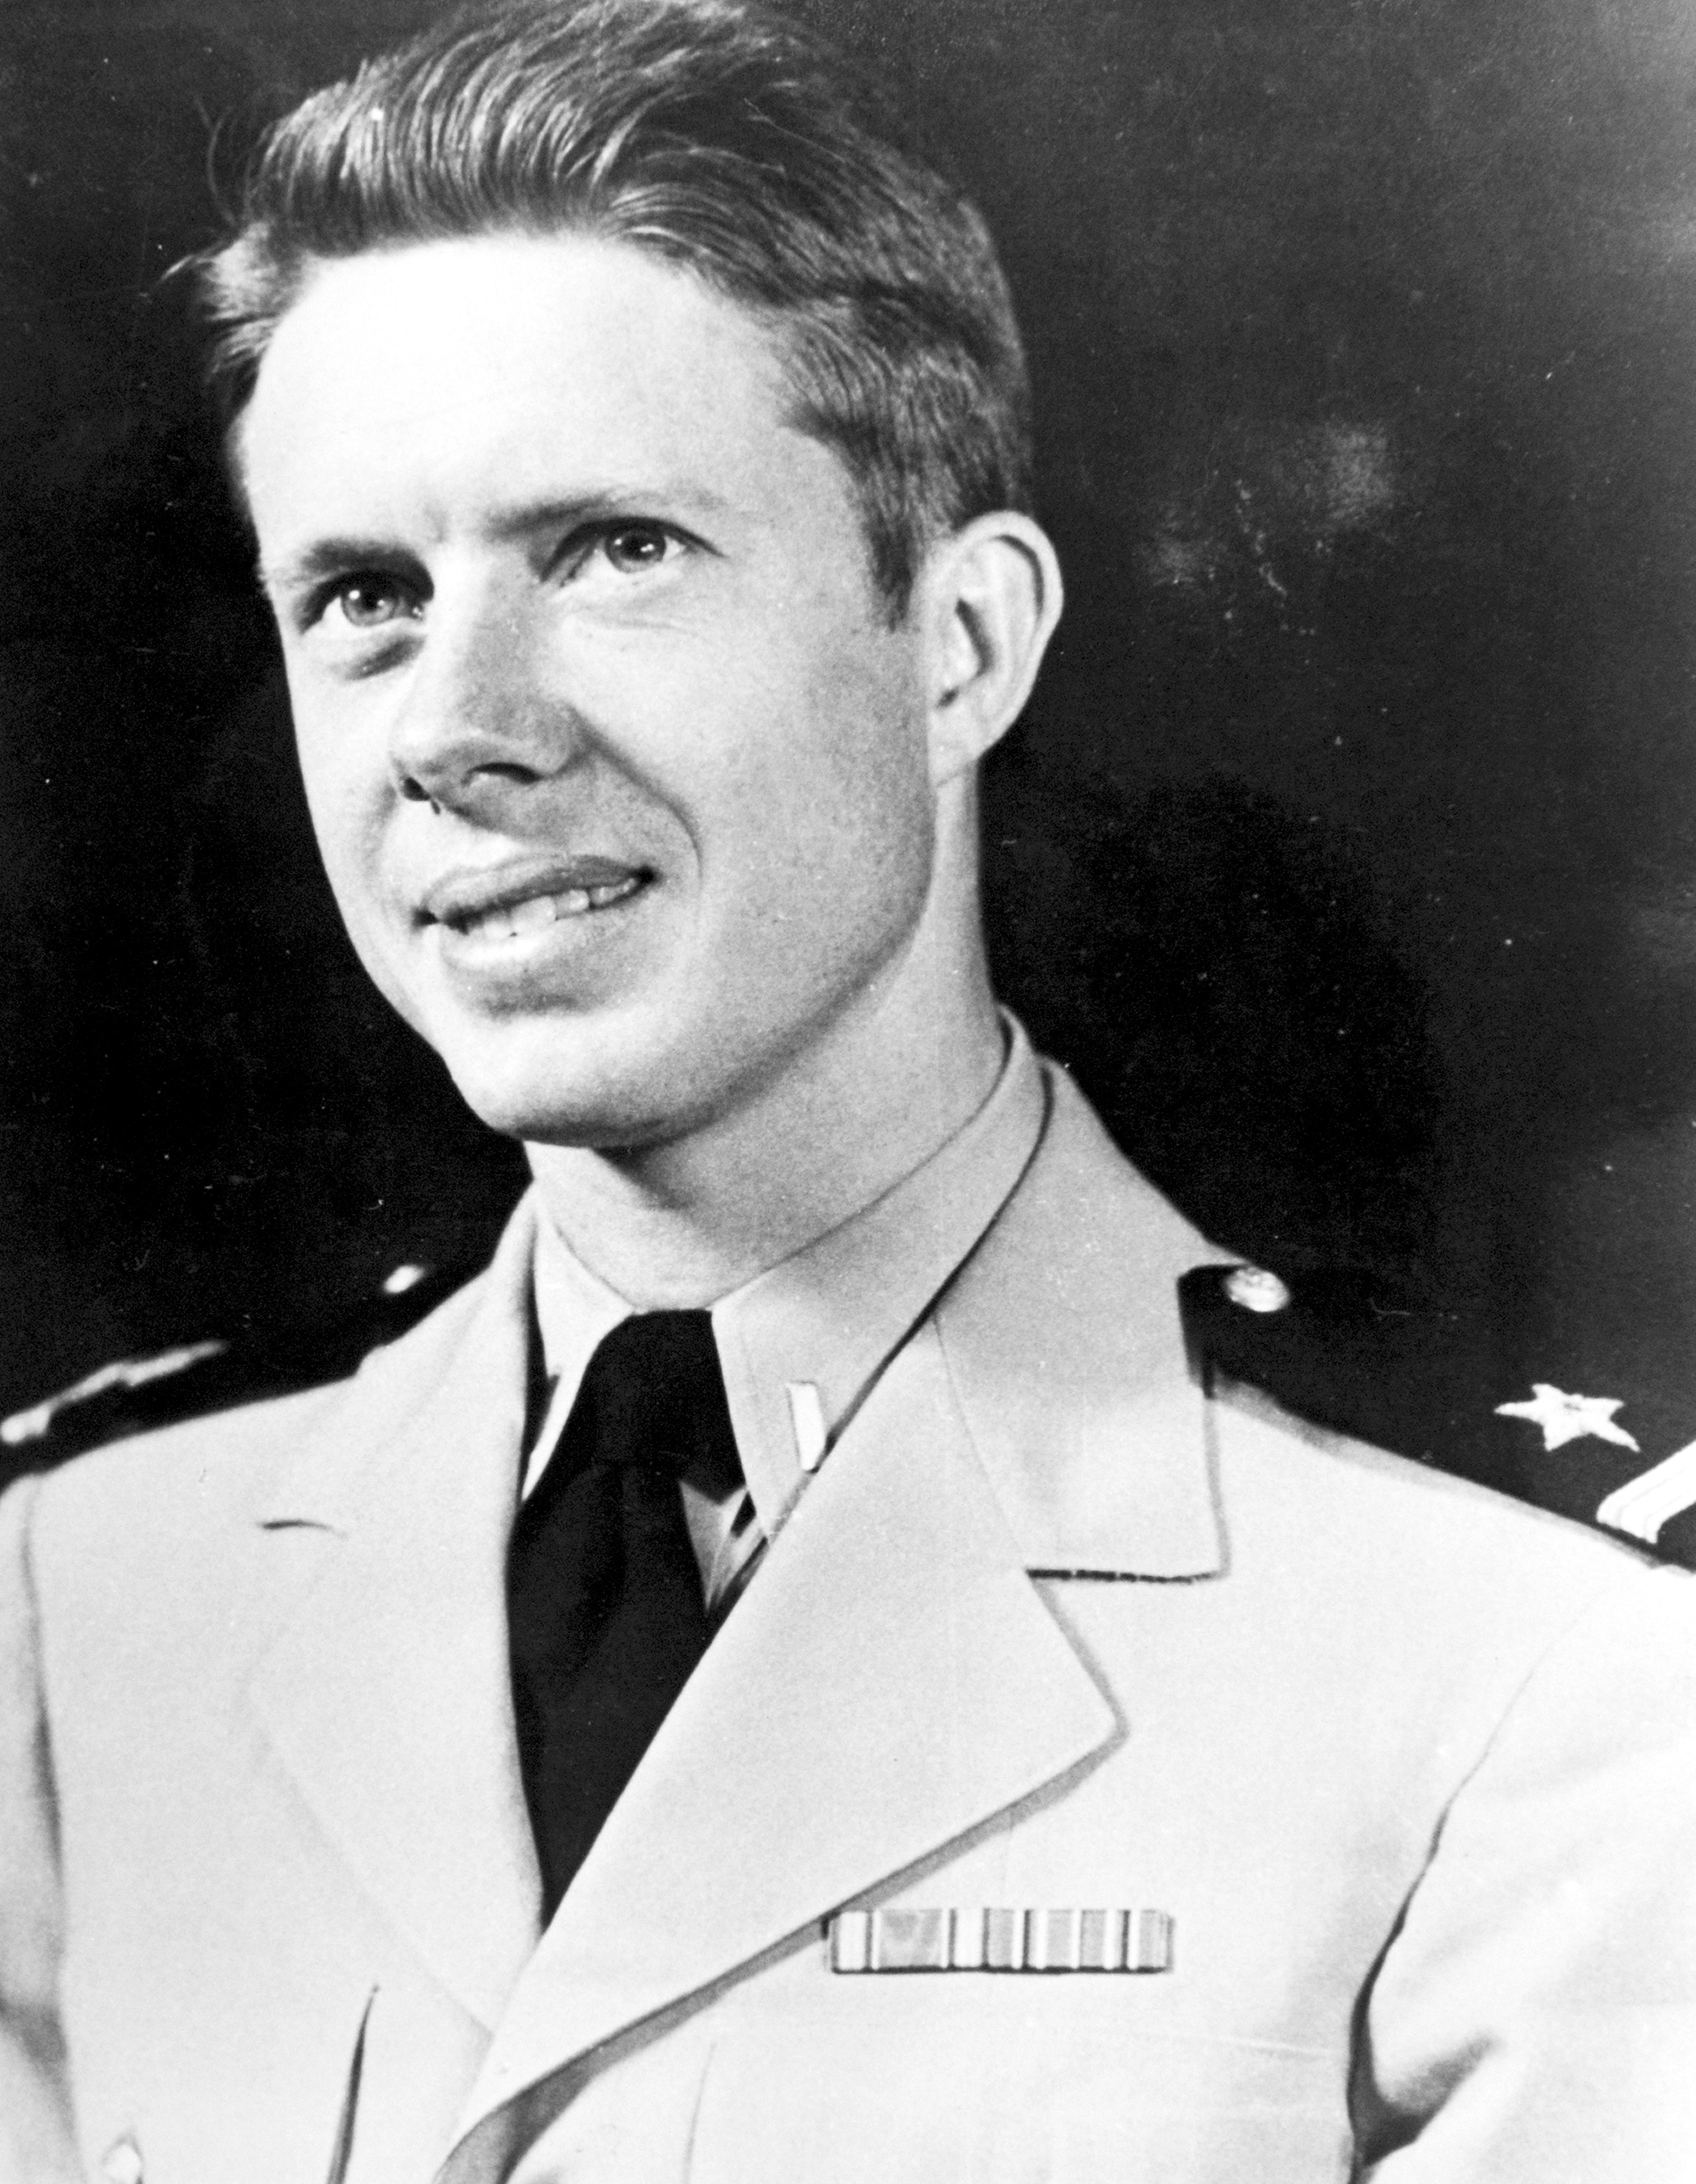 Jimmy (James Earl) Carter as Ensign, USN, circa World War II.